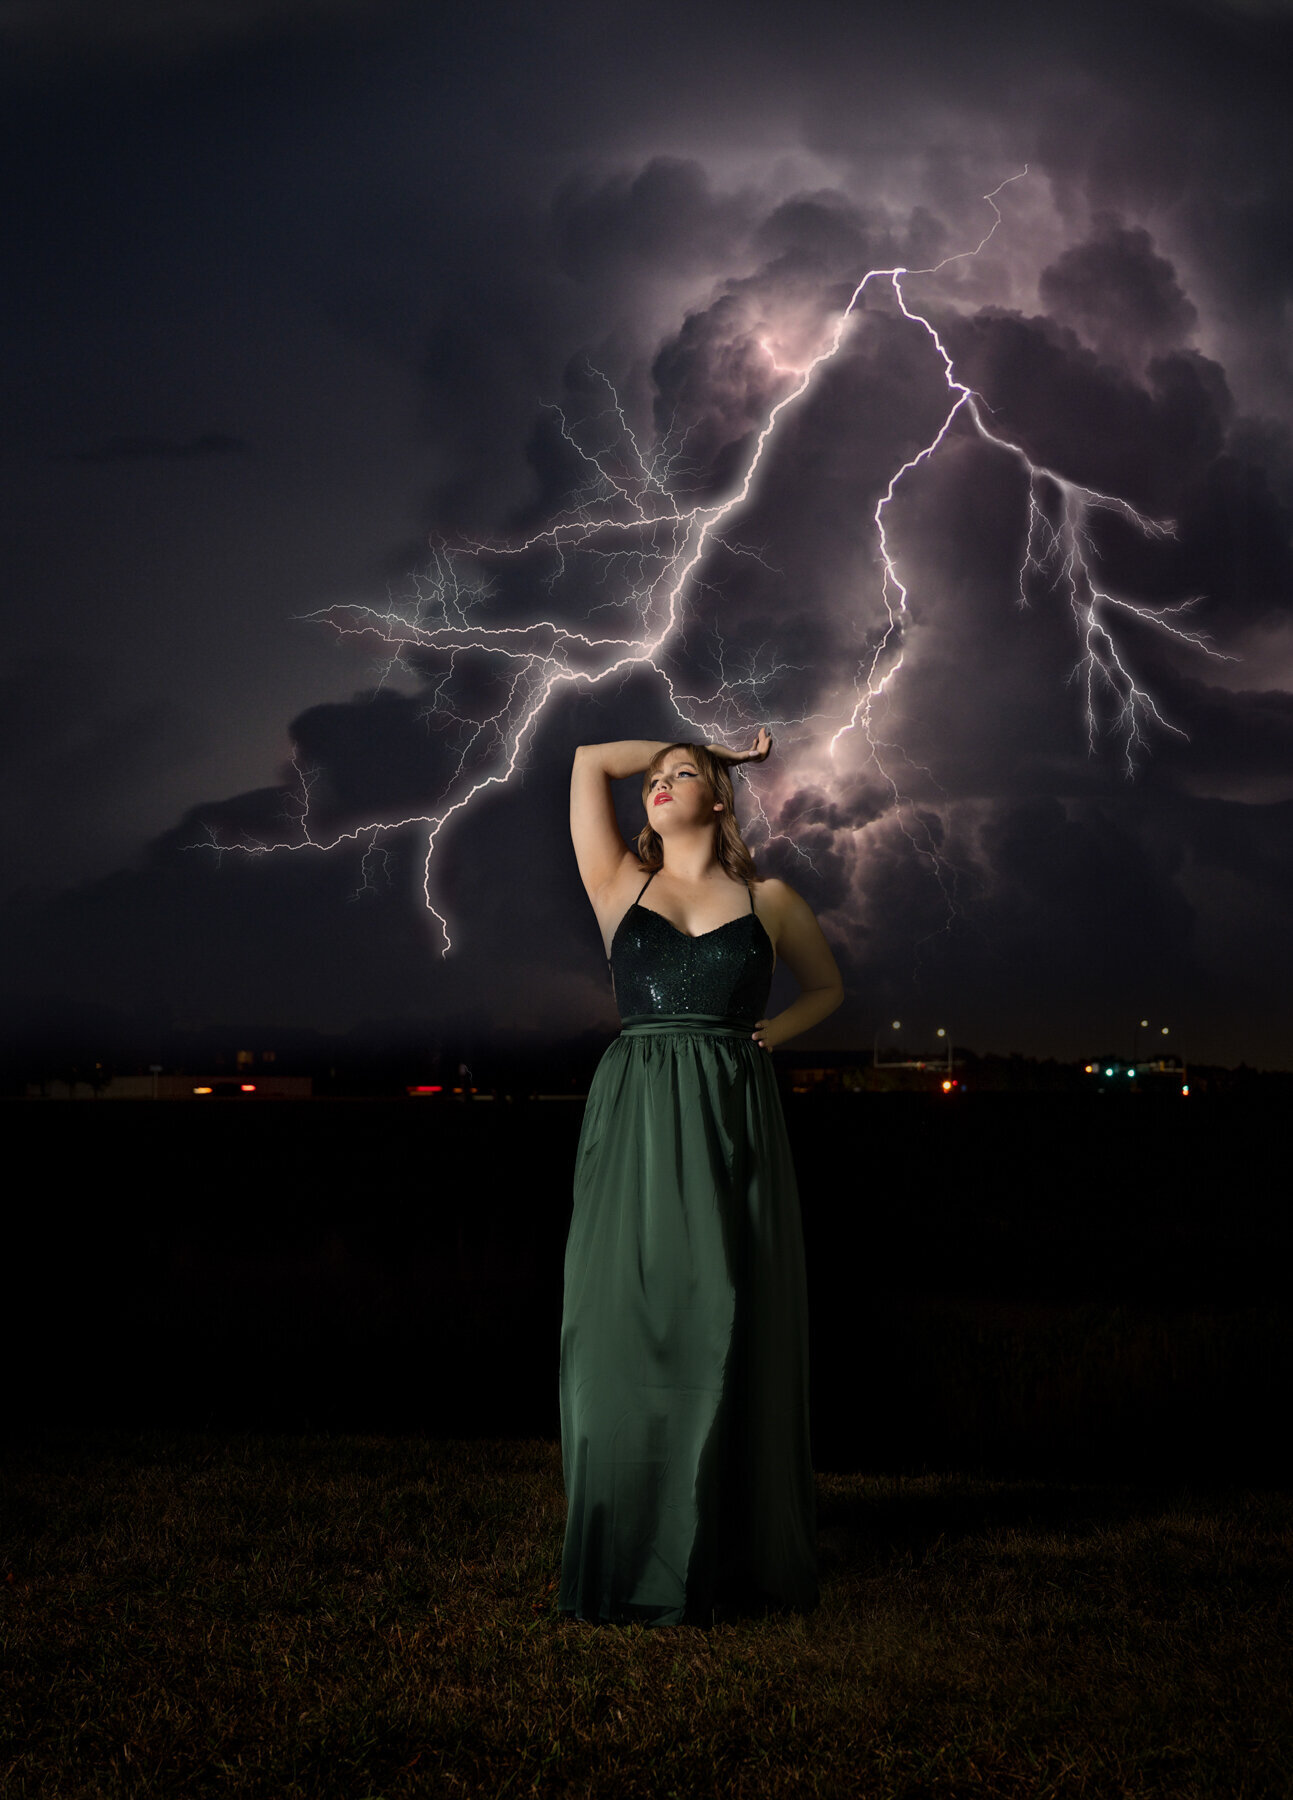 Eden Prairie Minnesota high school grad photo of girl in prom dress with lightning